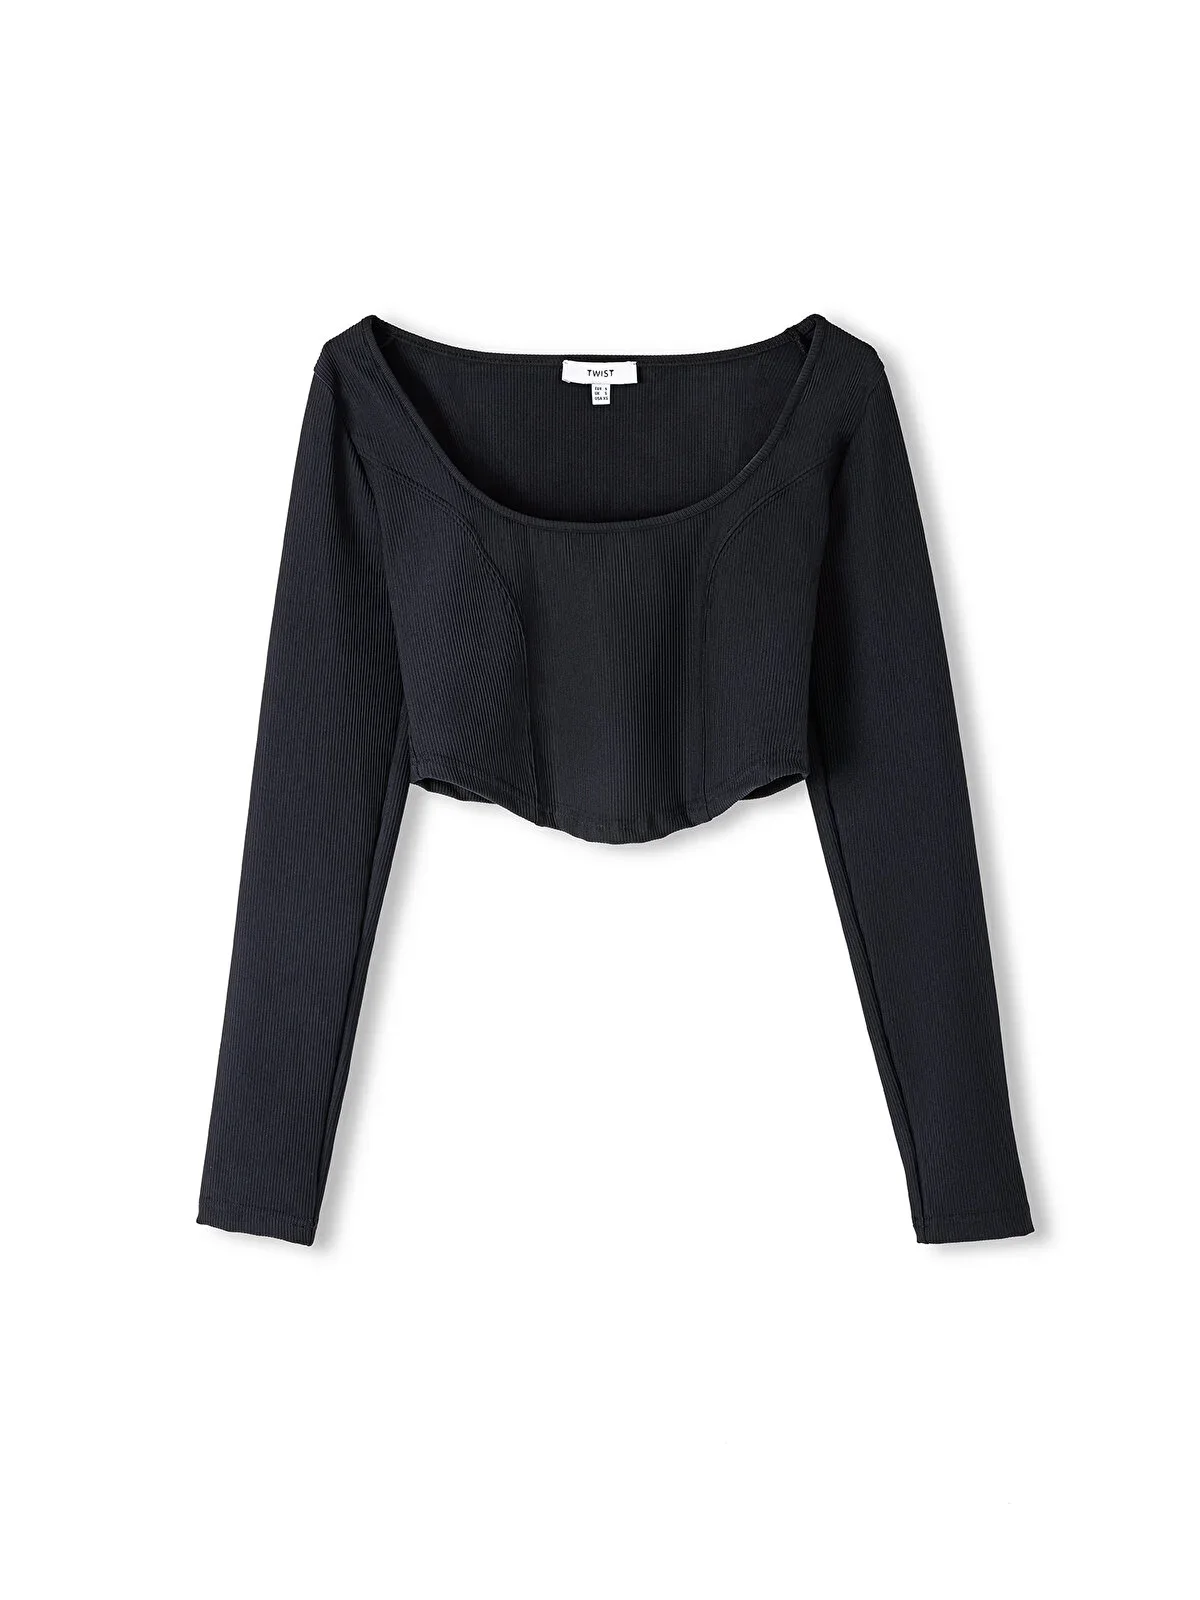 Kadın Uzun Kollu Crop T-Shirt - Siyah - 6